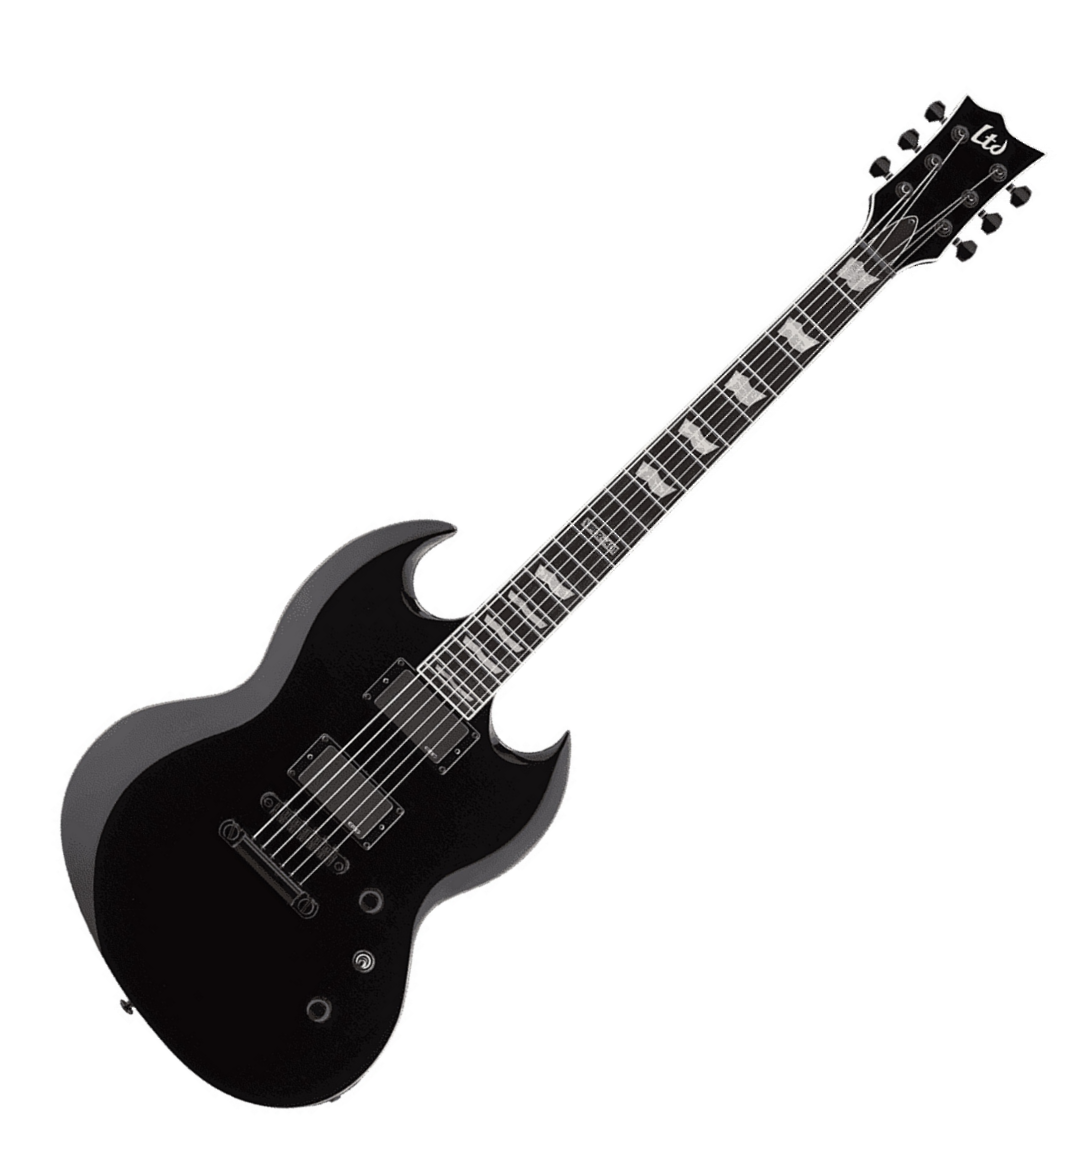 Ltd Viper-401 Hh Emg Ht Rw - Black - Double cut electric guitar - Variation 3